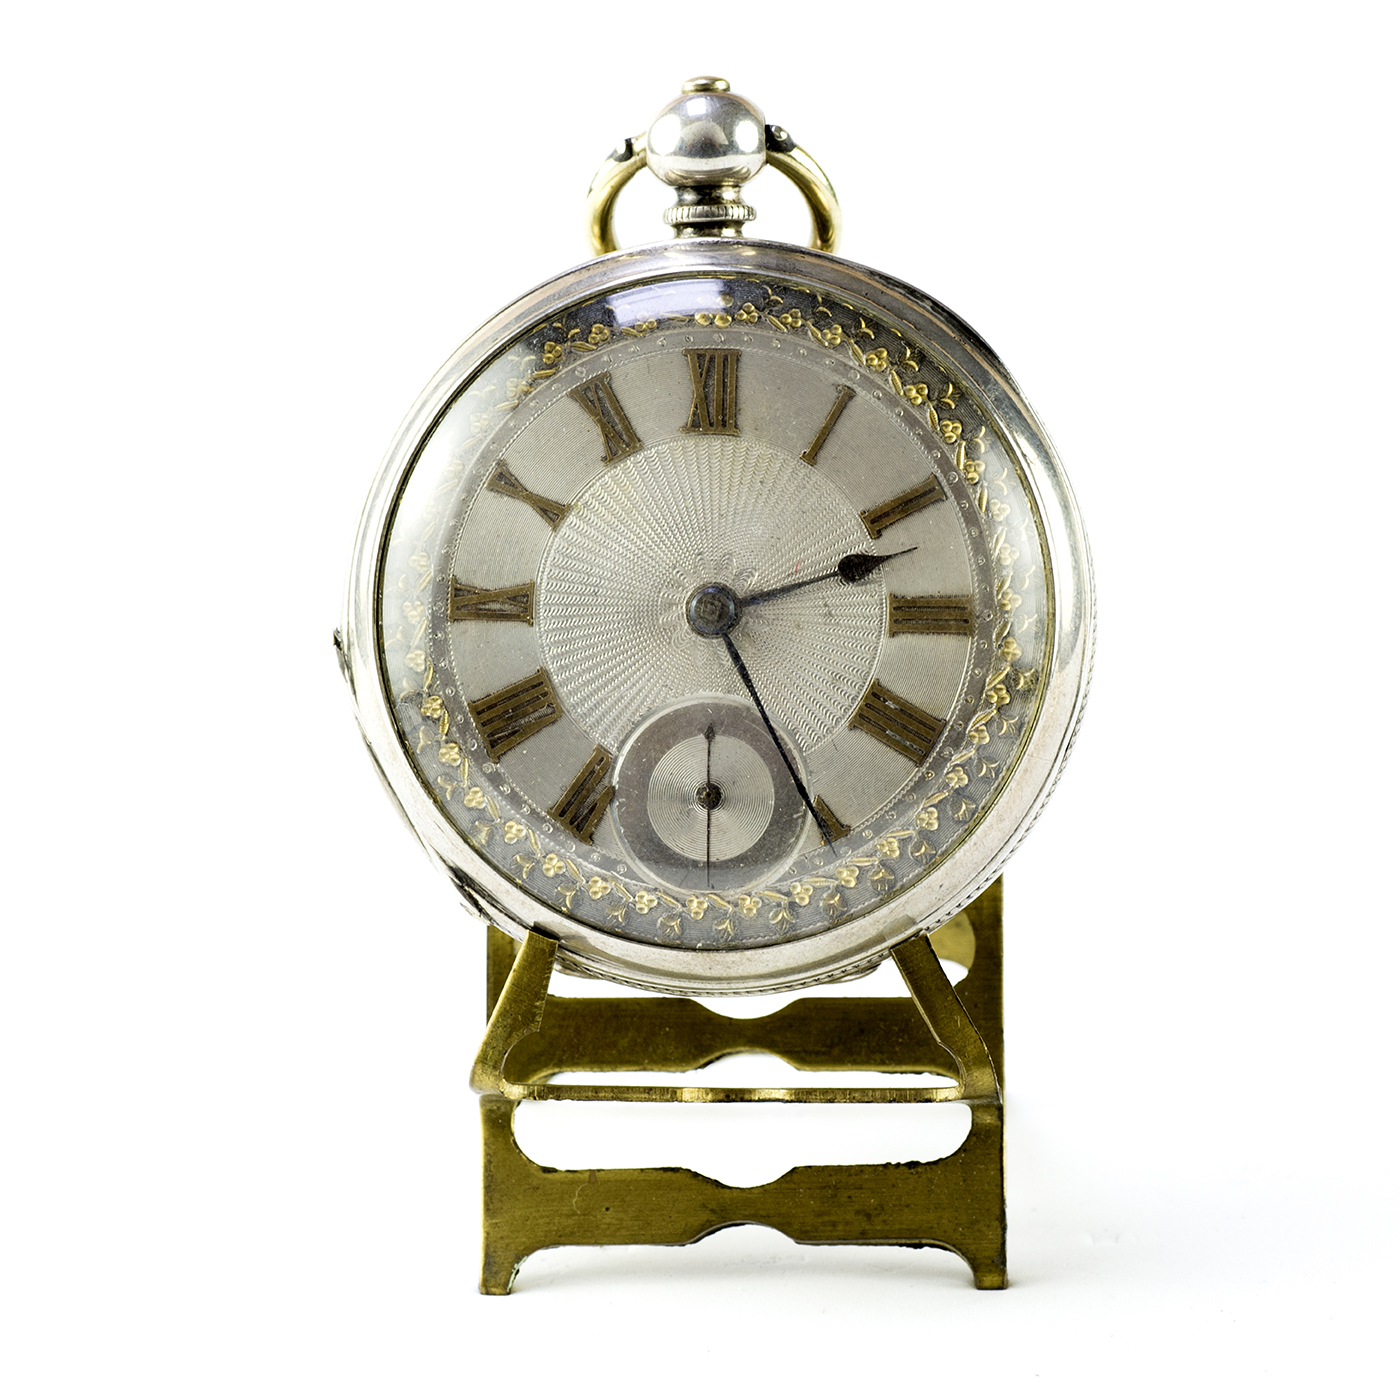 Reloj inglés de Bolsillo, lepine. Suiza, ca. 1880.